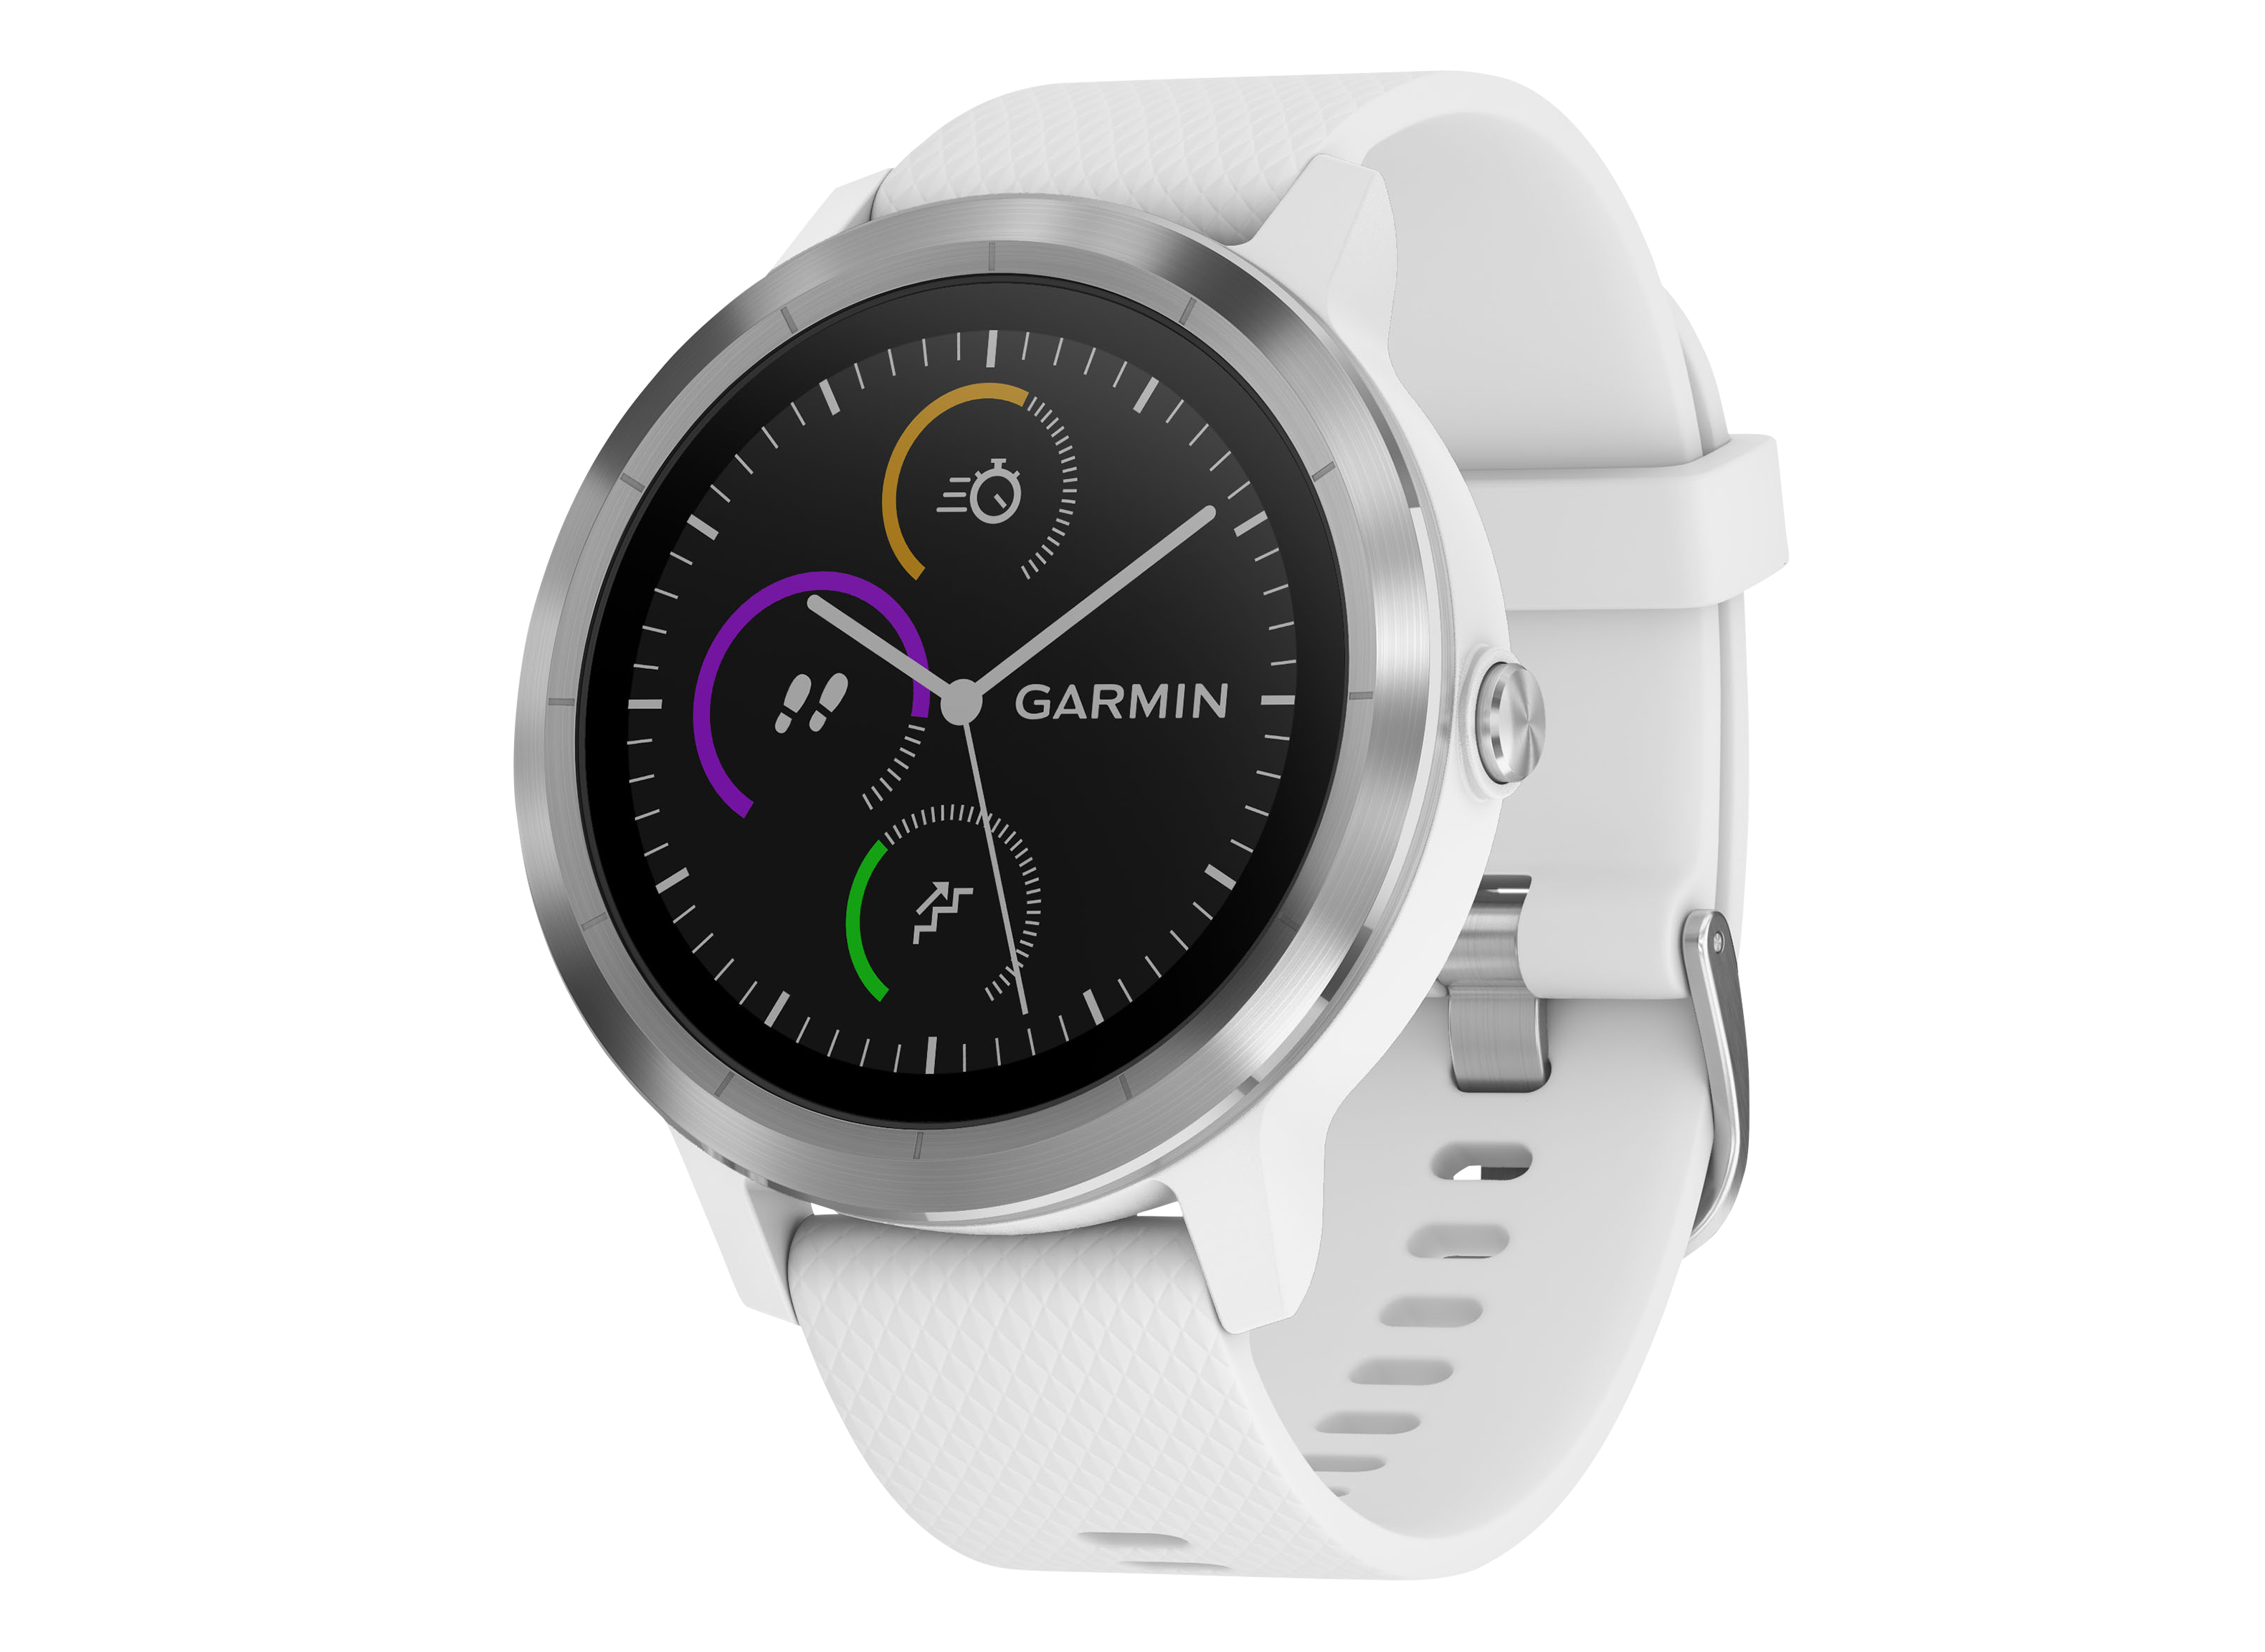 Garmin Vivoactive 3 Smartwatch Review - Consumer Reports